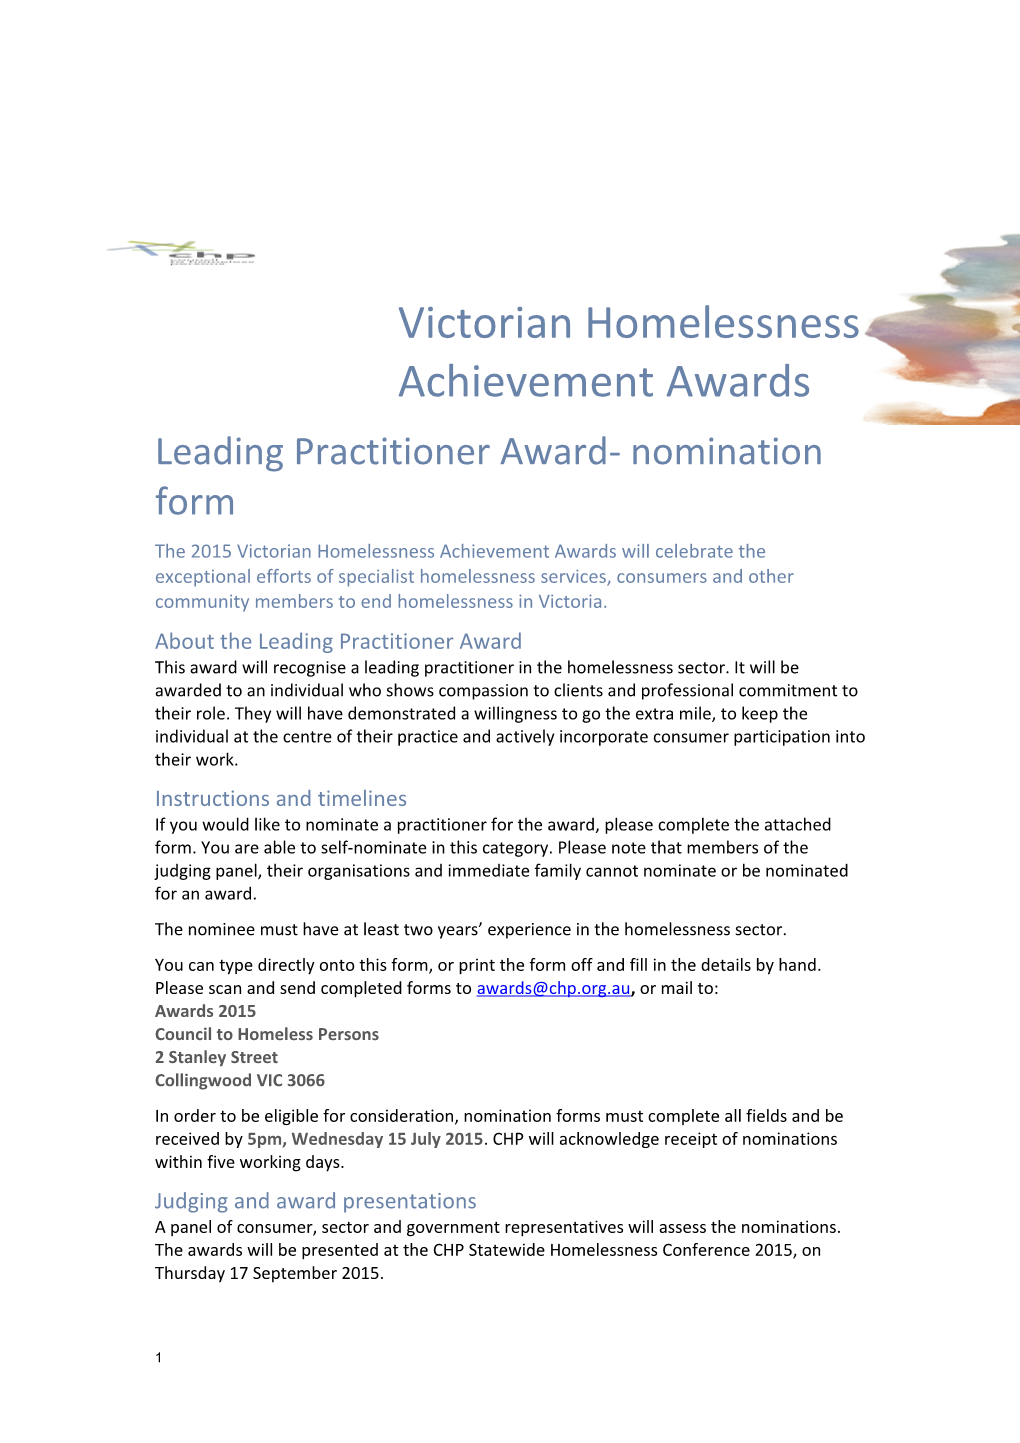 Leading Practitioner Award- Nomination Form